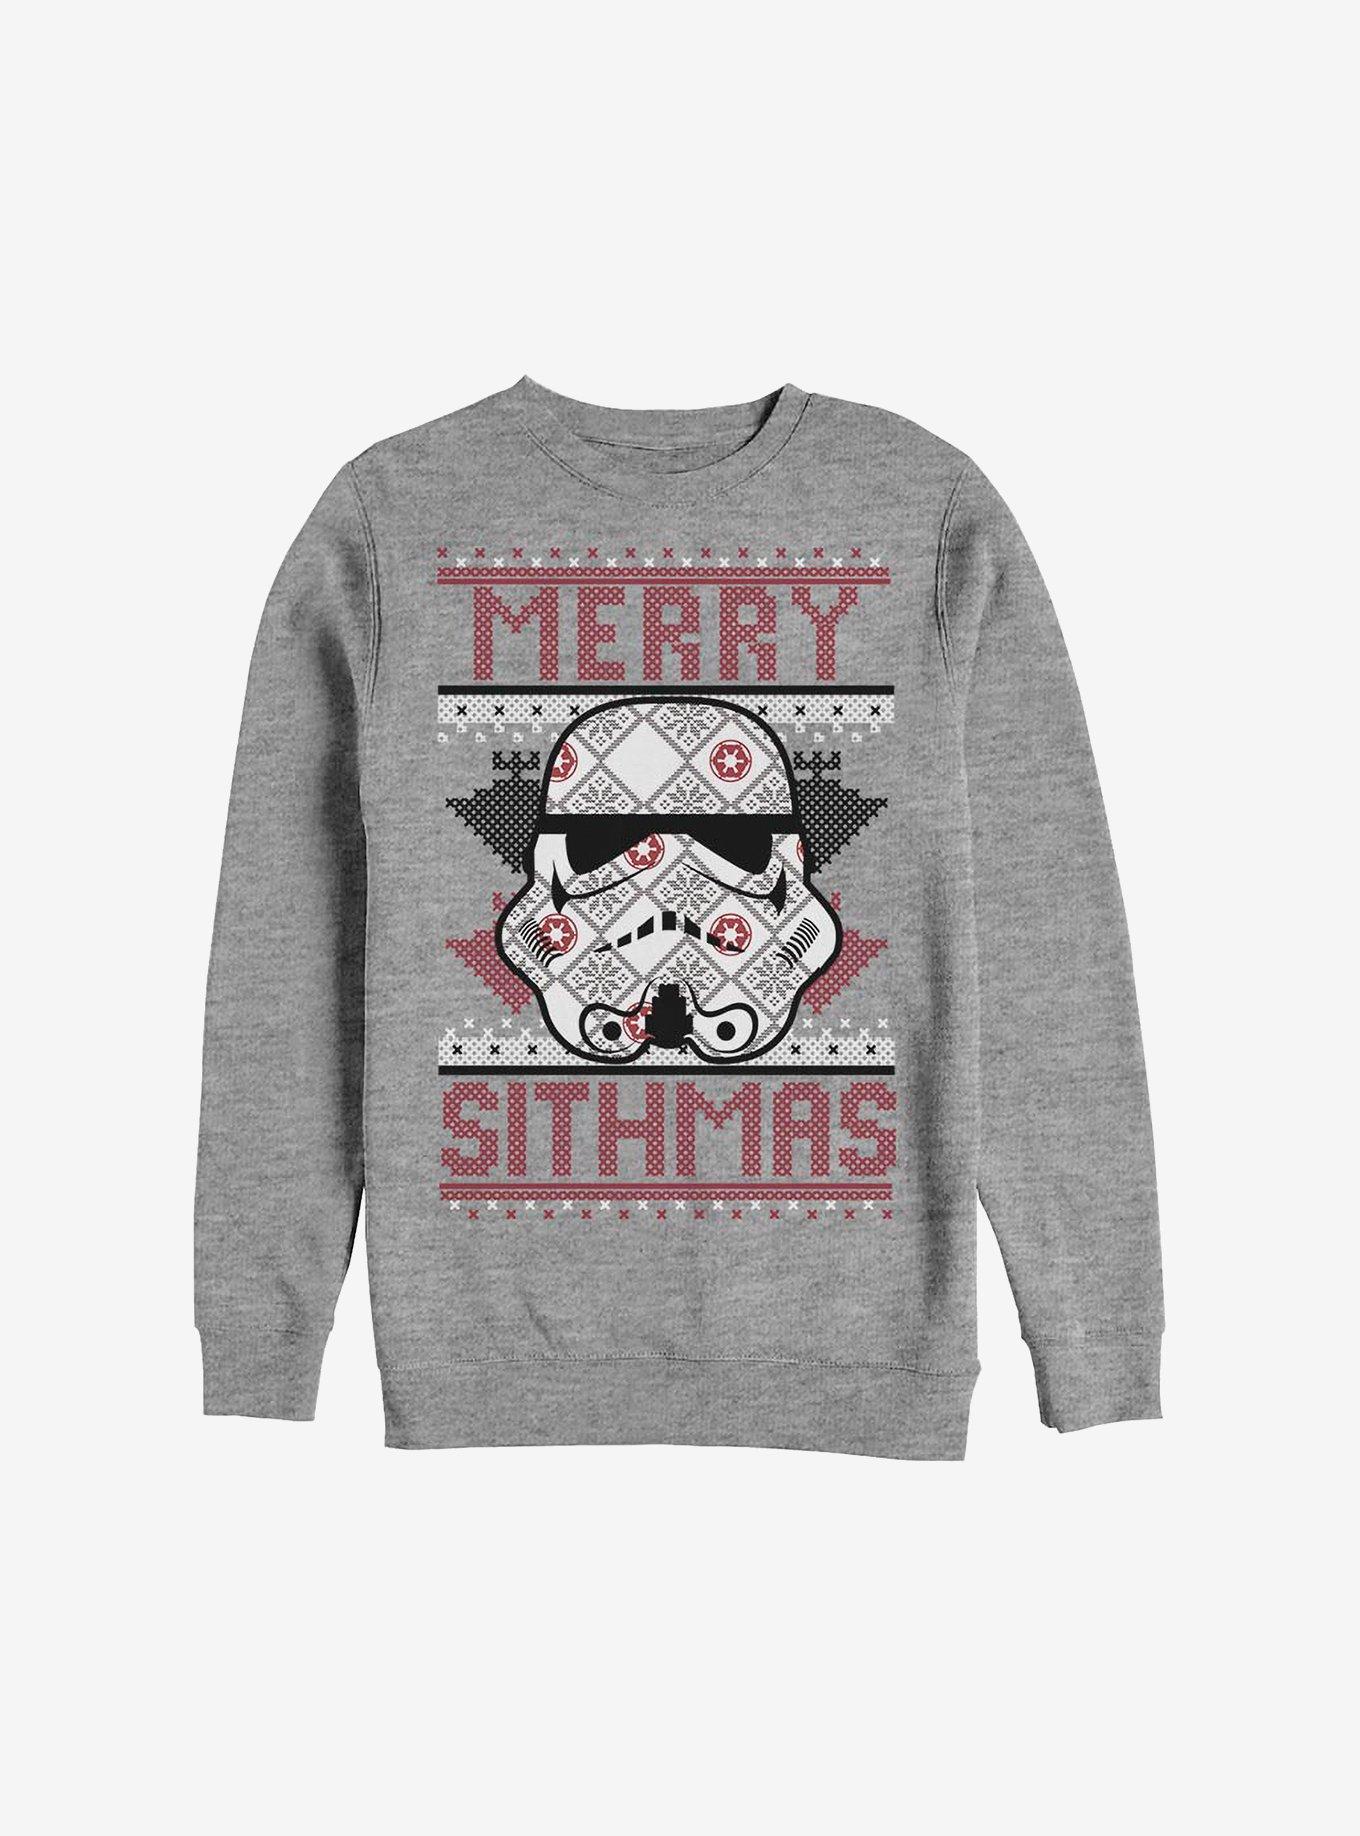 Star Wars Merry Sithmas Ugly Christmas Sweater Sweatshirt